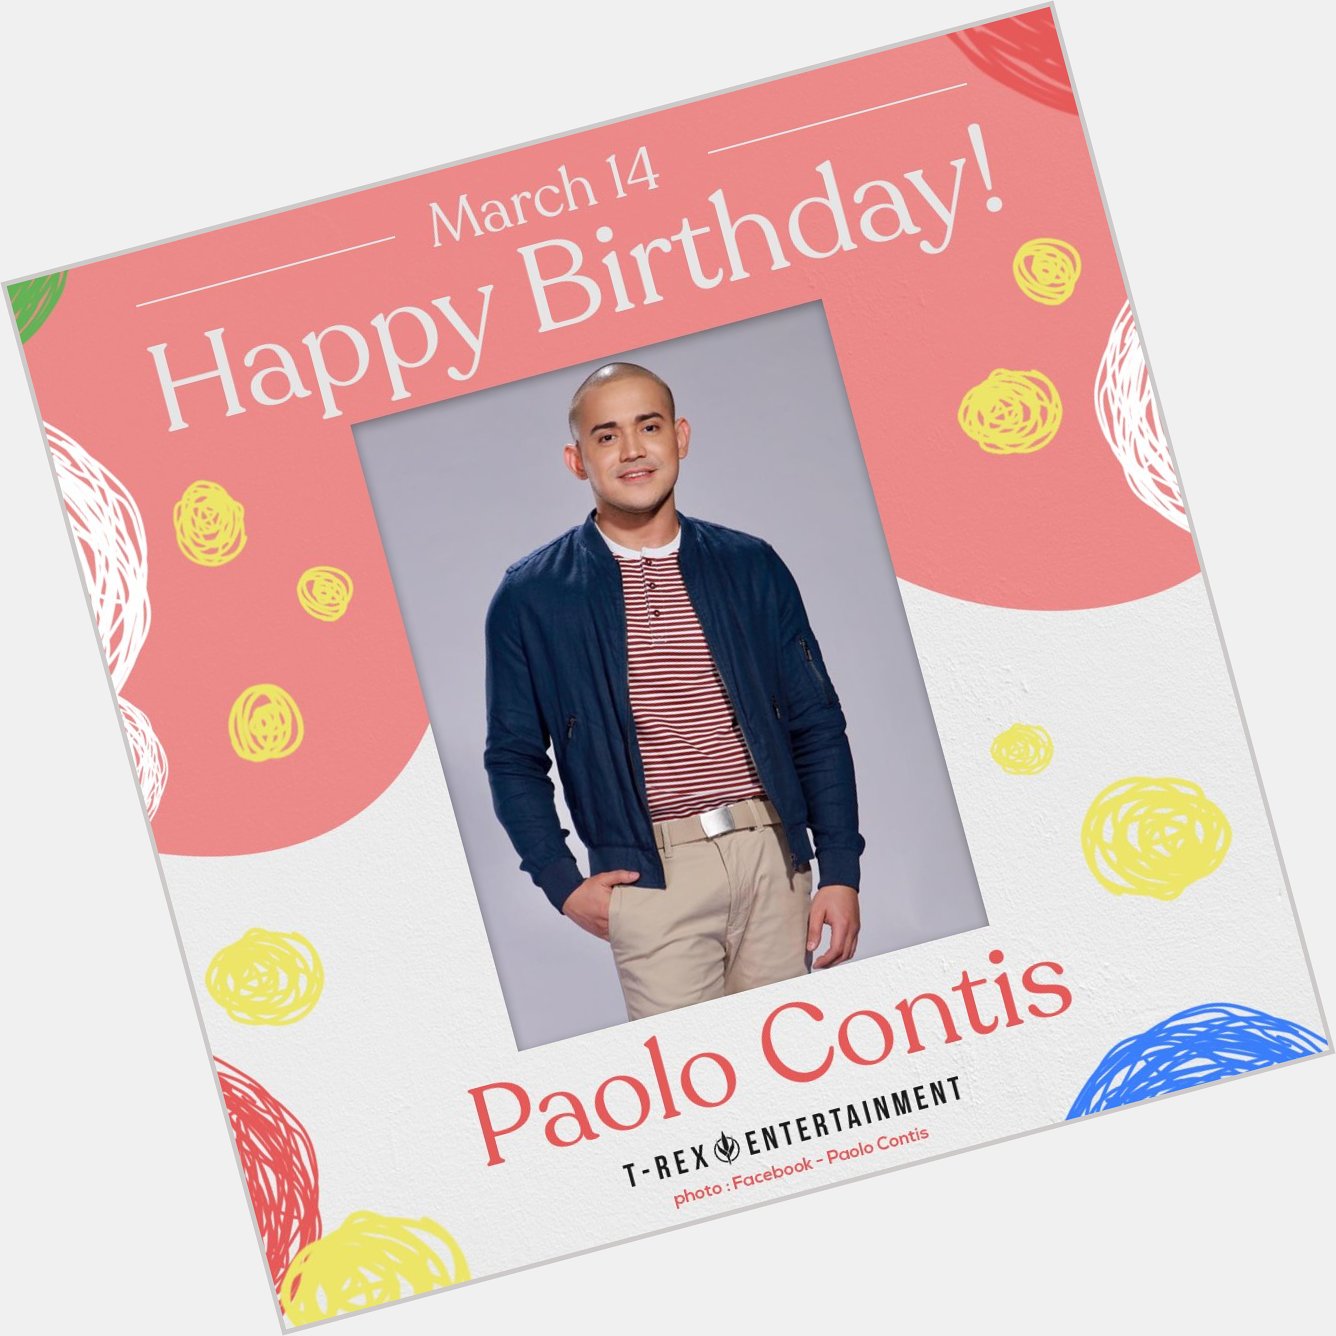 Happy 36th birthday, Paolo Contis!

Trivia: His full name is Paolo Enrico Tusi Contis. 